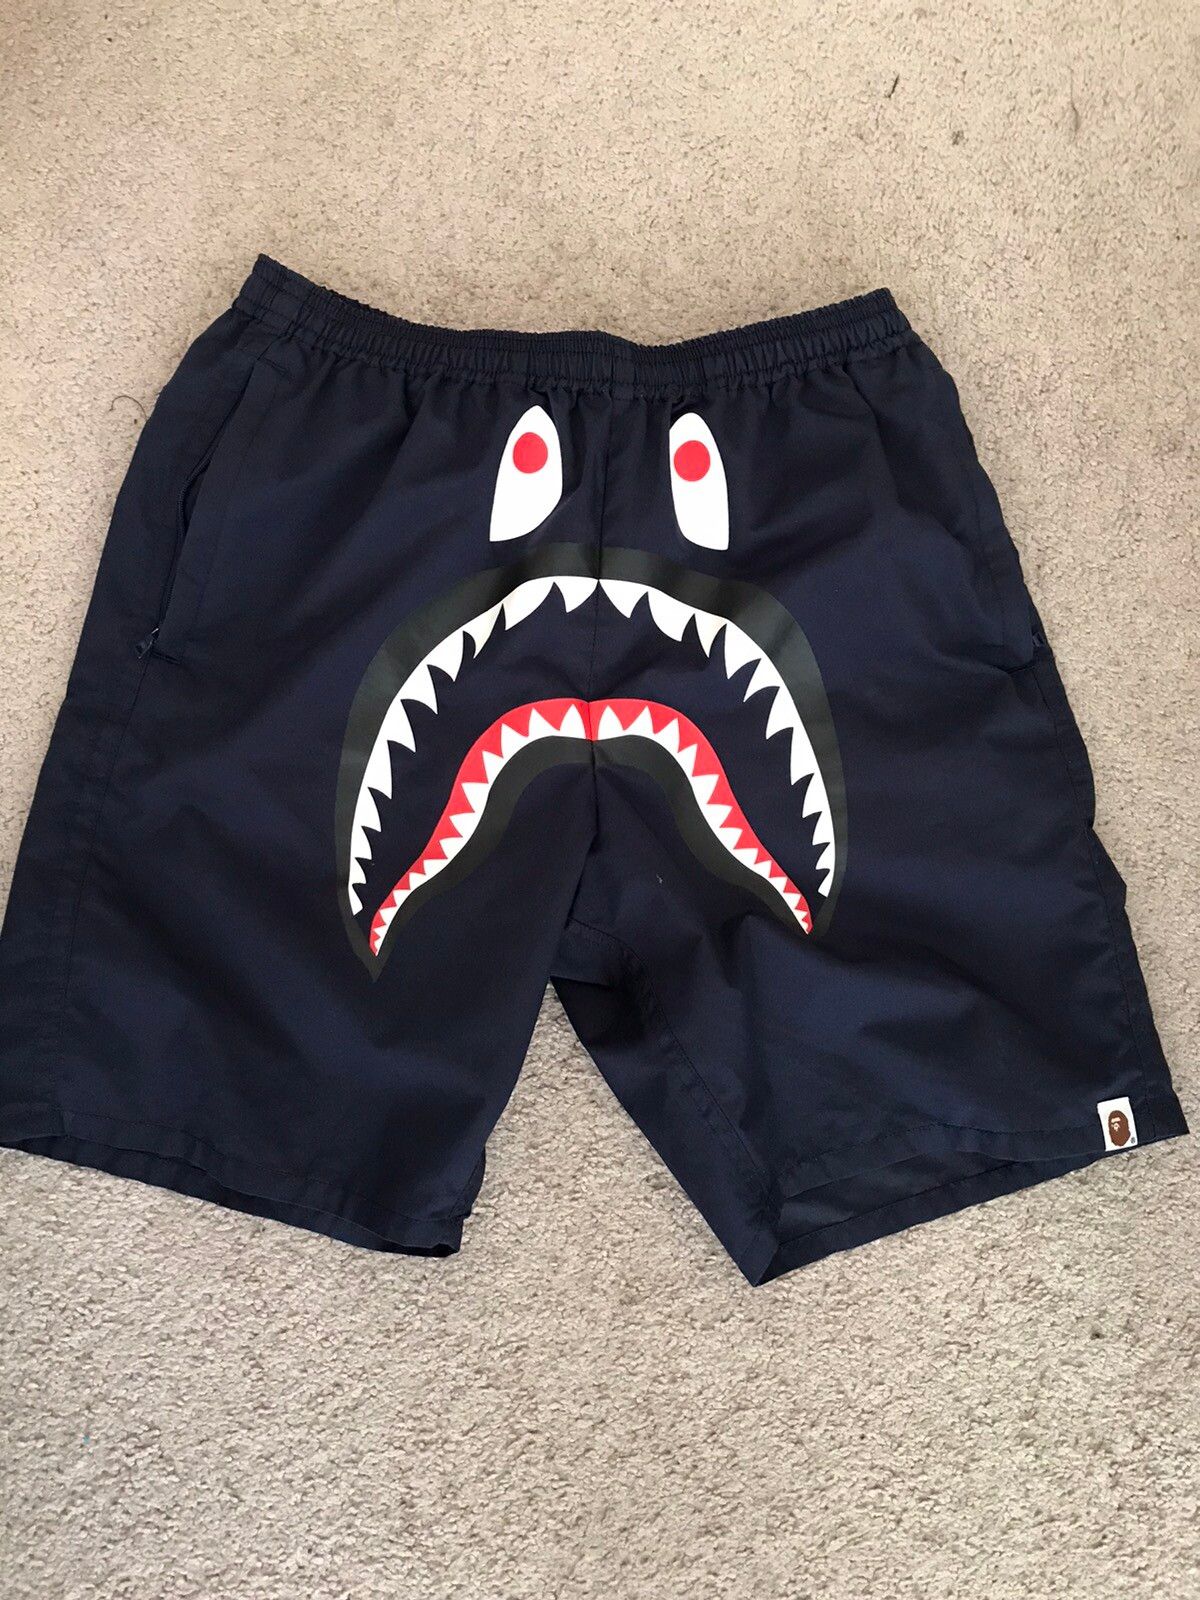 Bape Bape Shark Shorts Size US 28 / EU 44 - 1 Preview